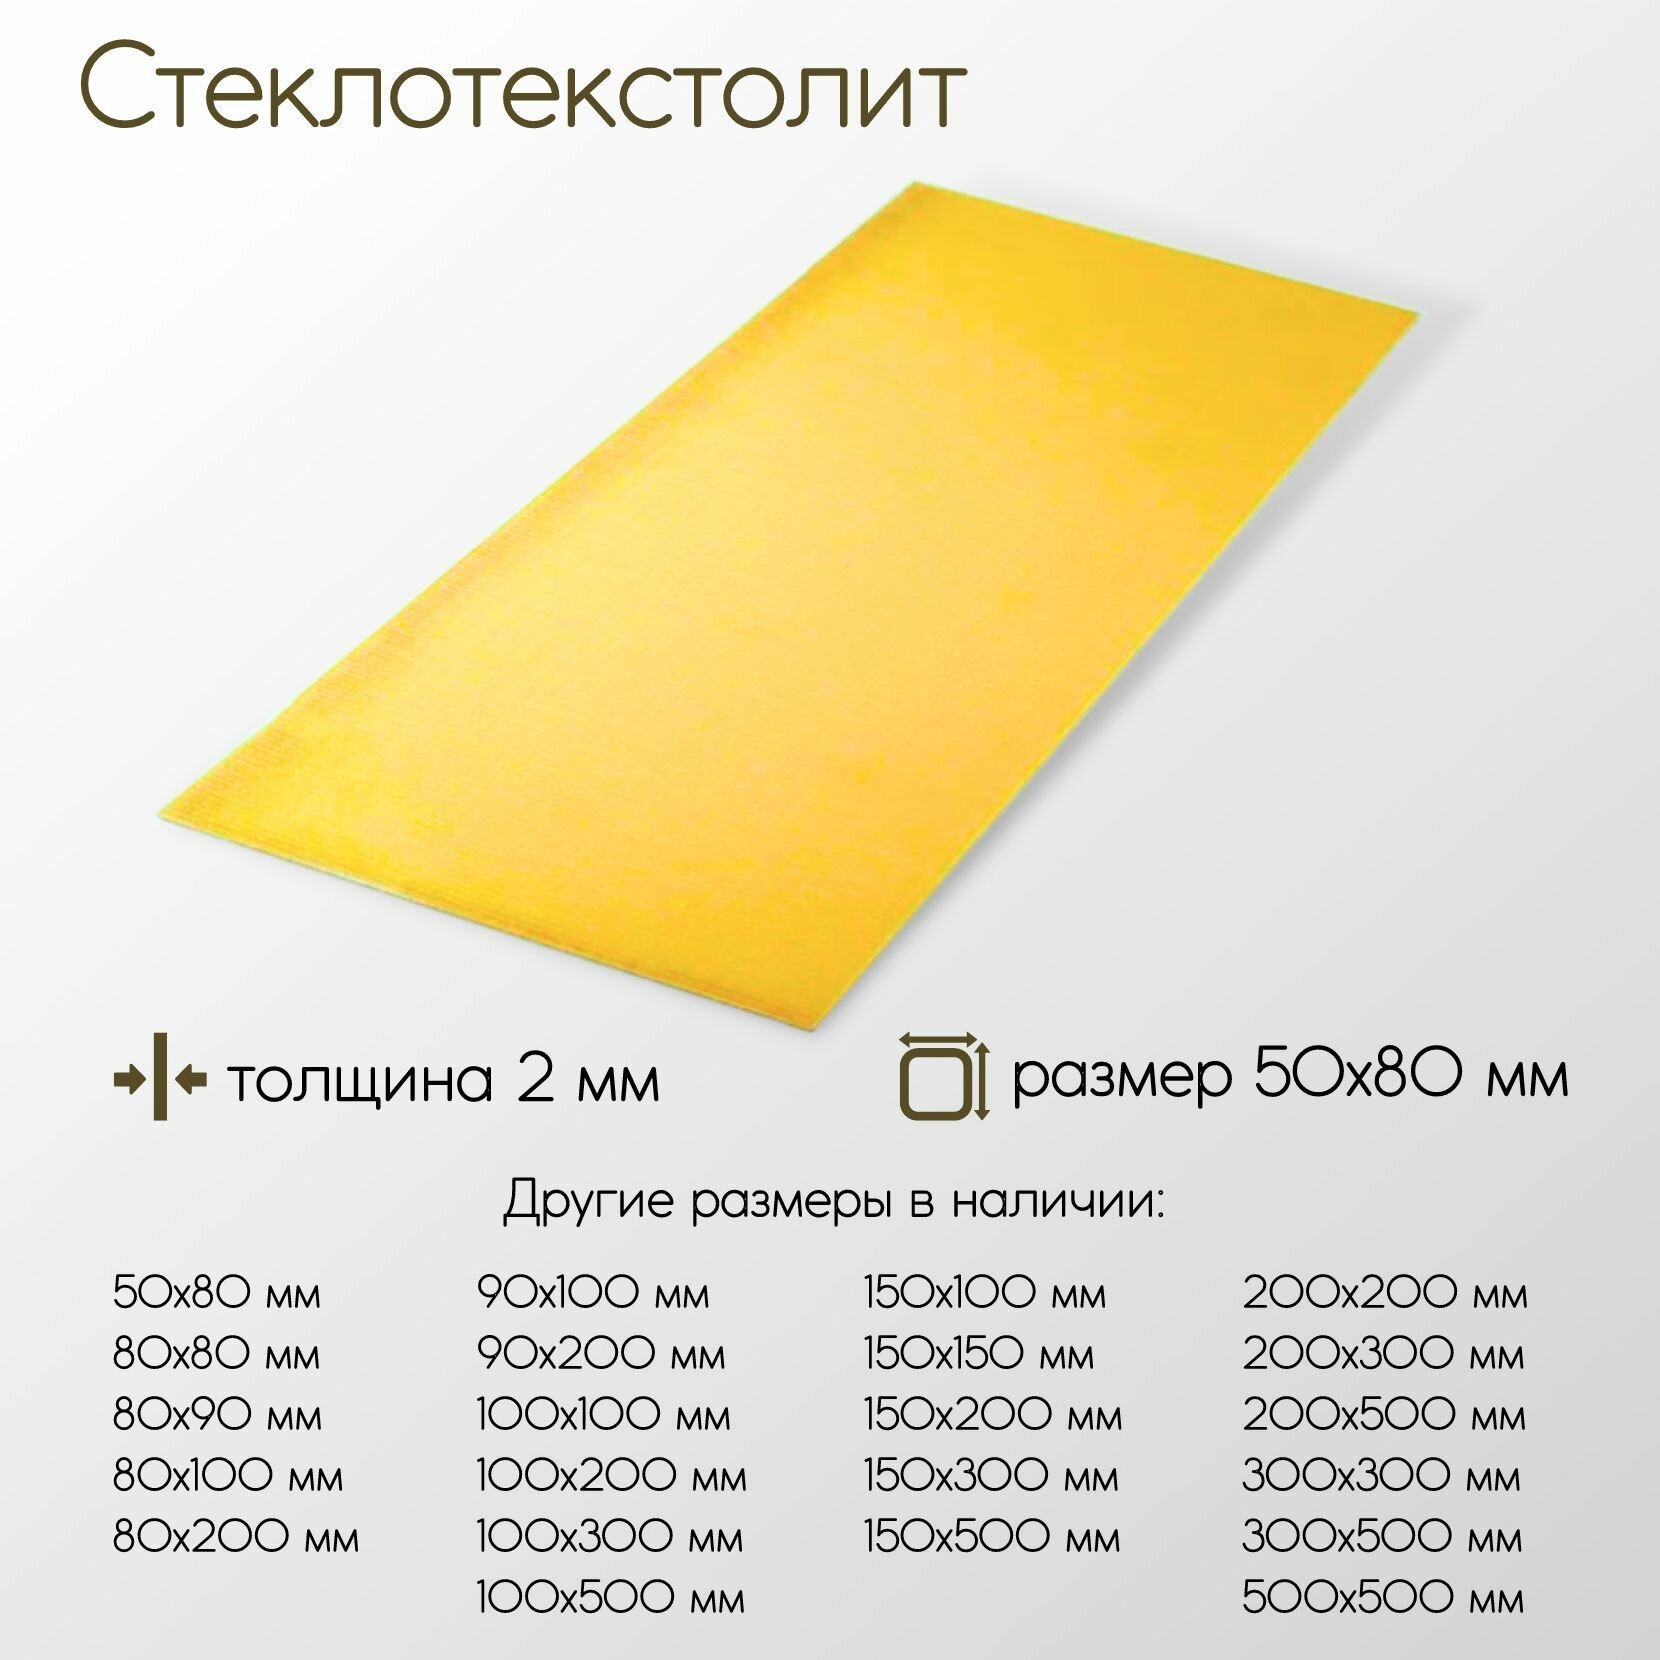 Стеклотекстолит стэф лист толщина 2 мм 2x50x80 мм